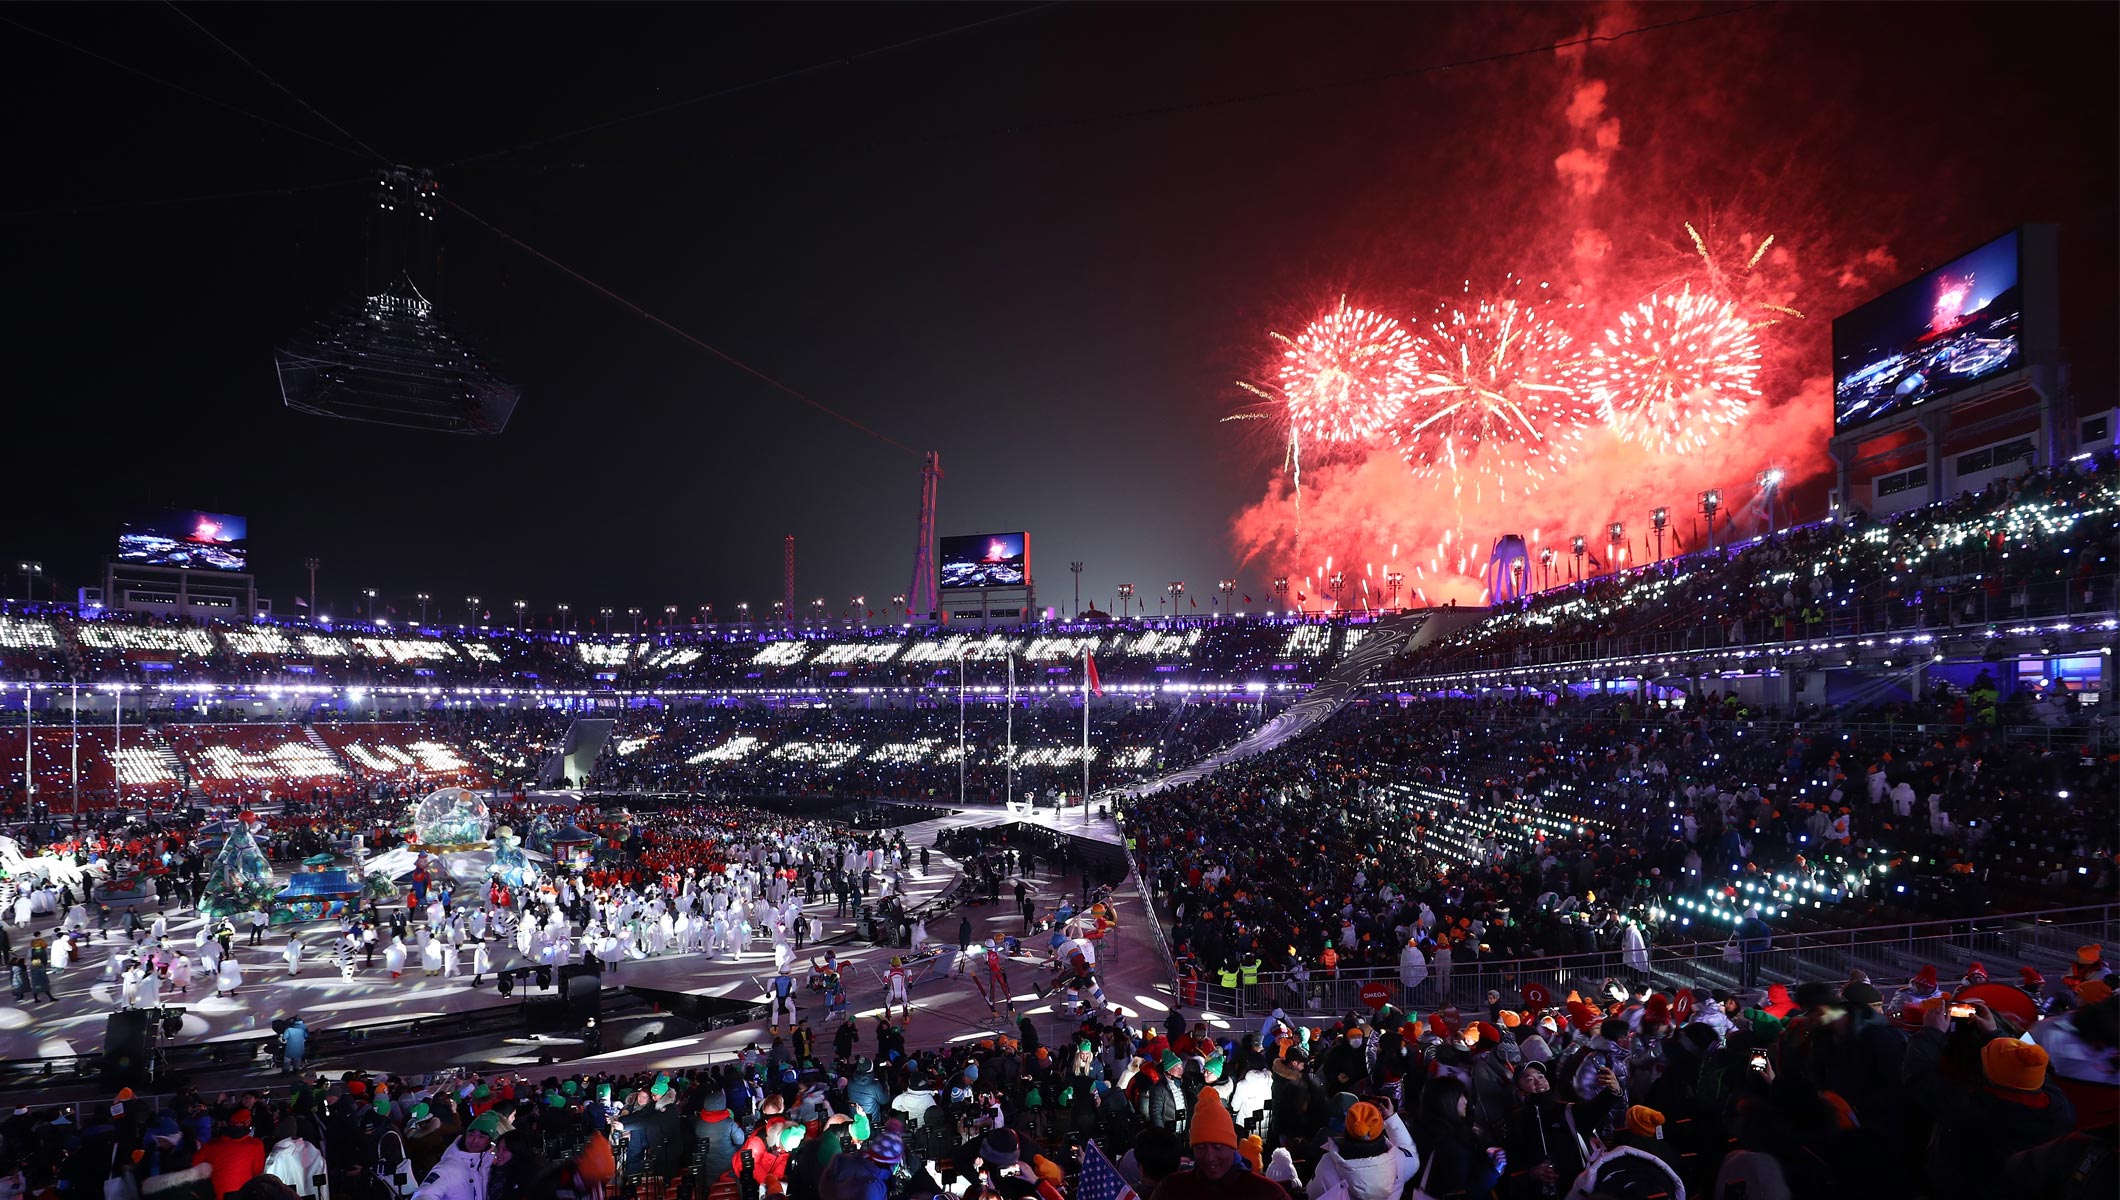 PyeongChang Winter Games closing ceremony